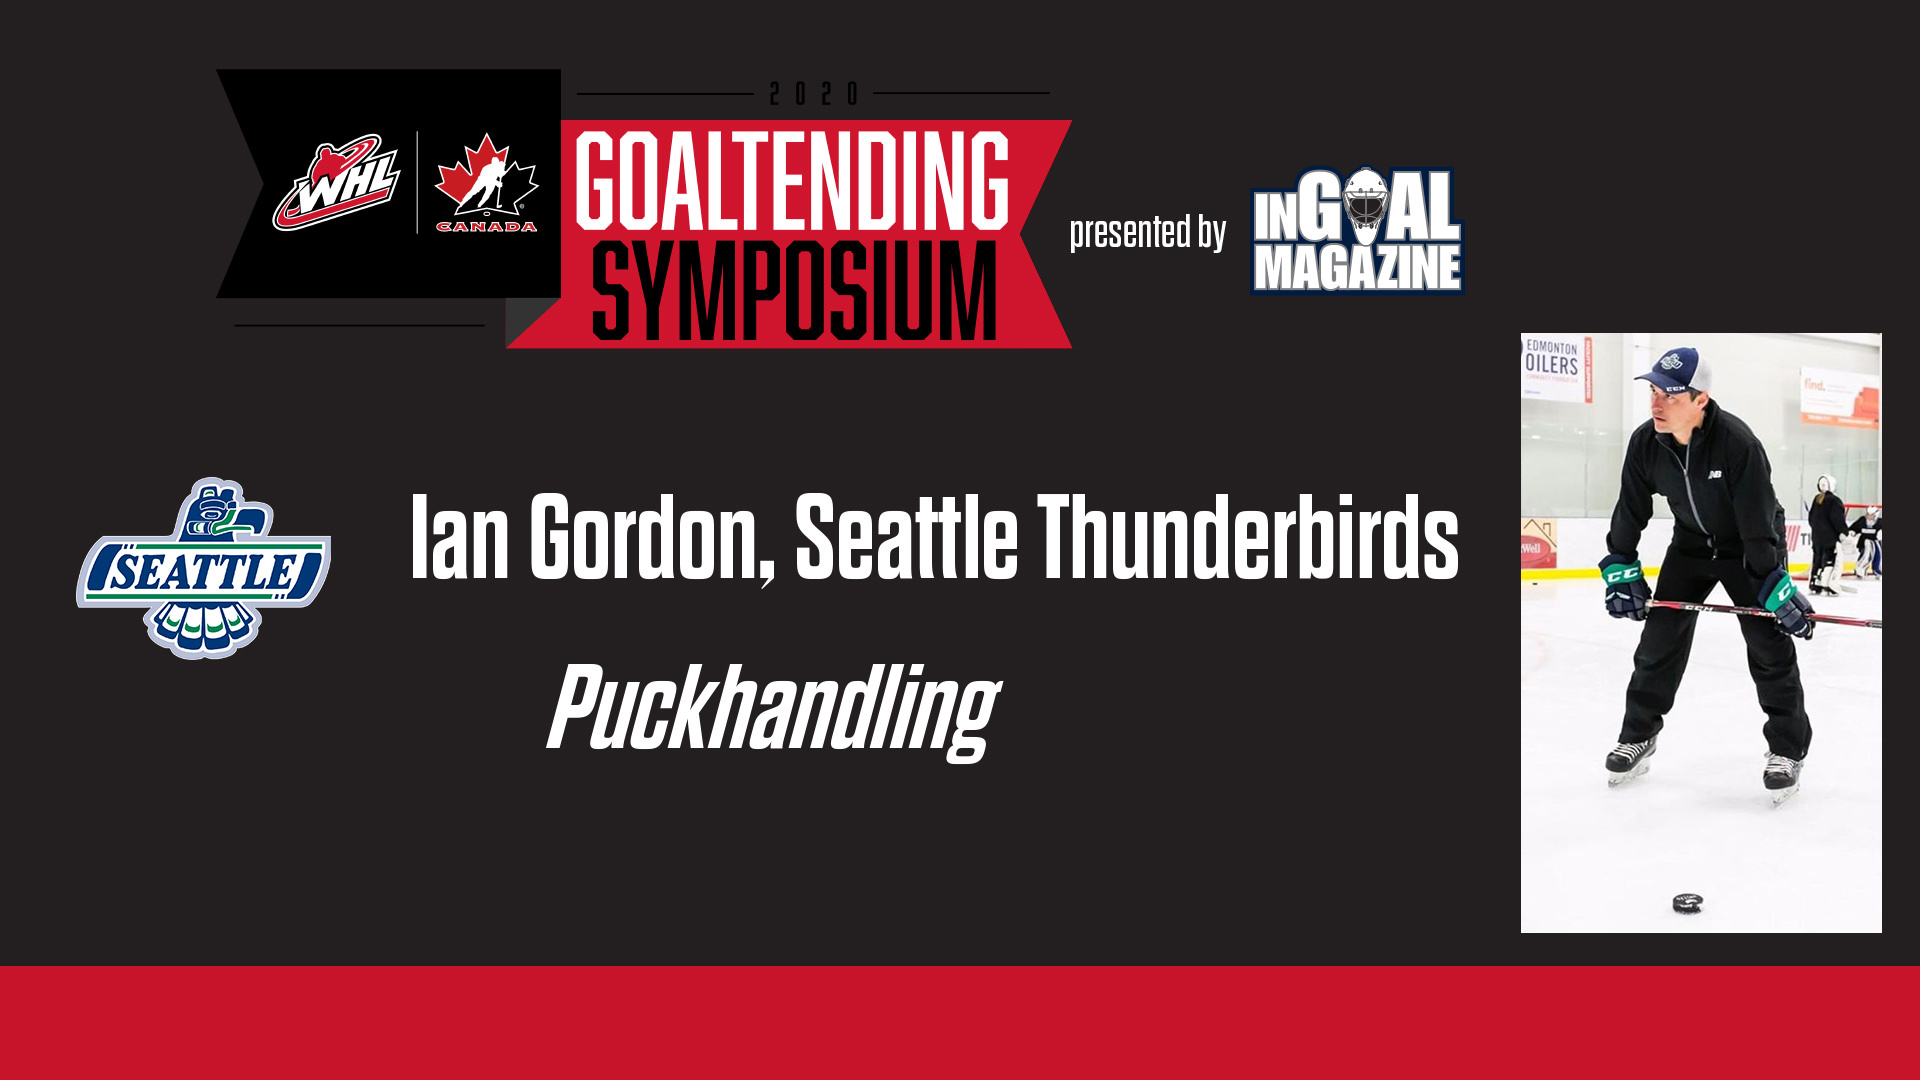 Seattle Thunderbirds goalie coach Ian Gordon Puckhandling tips, drills, guidelines and non-negotiables